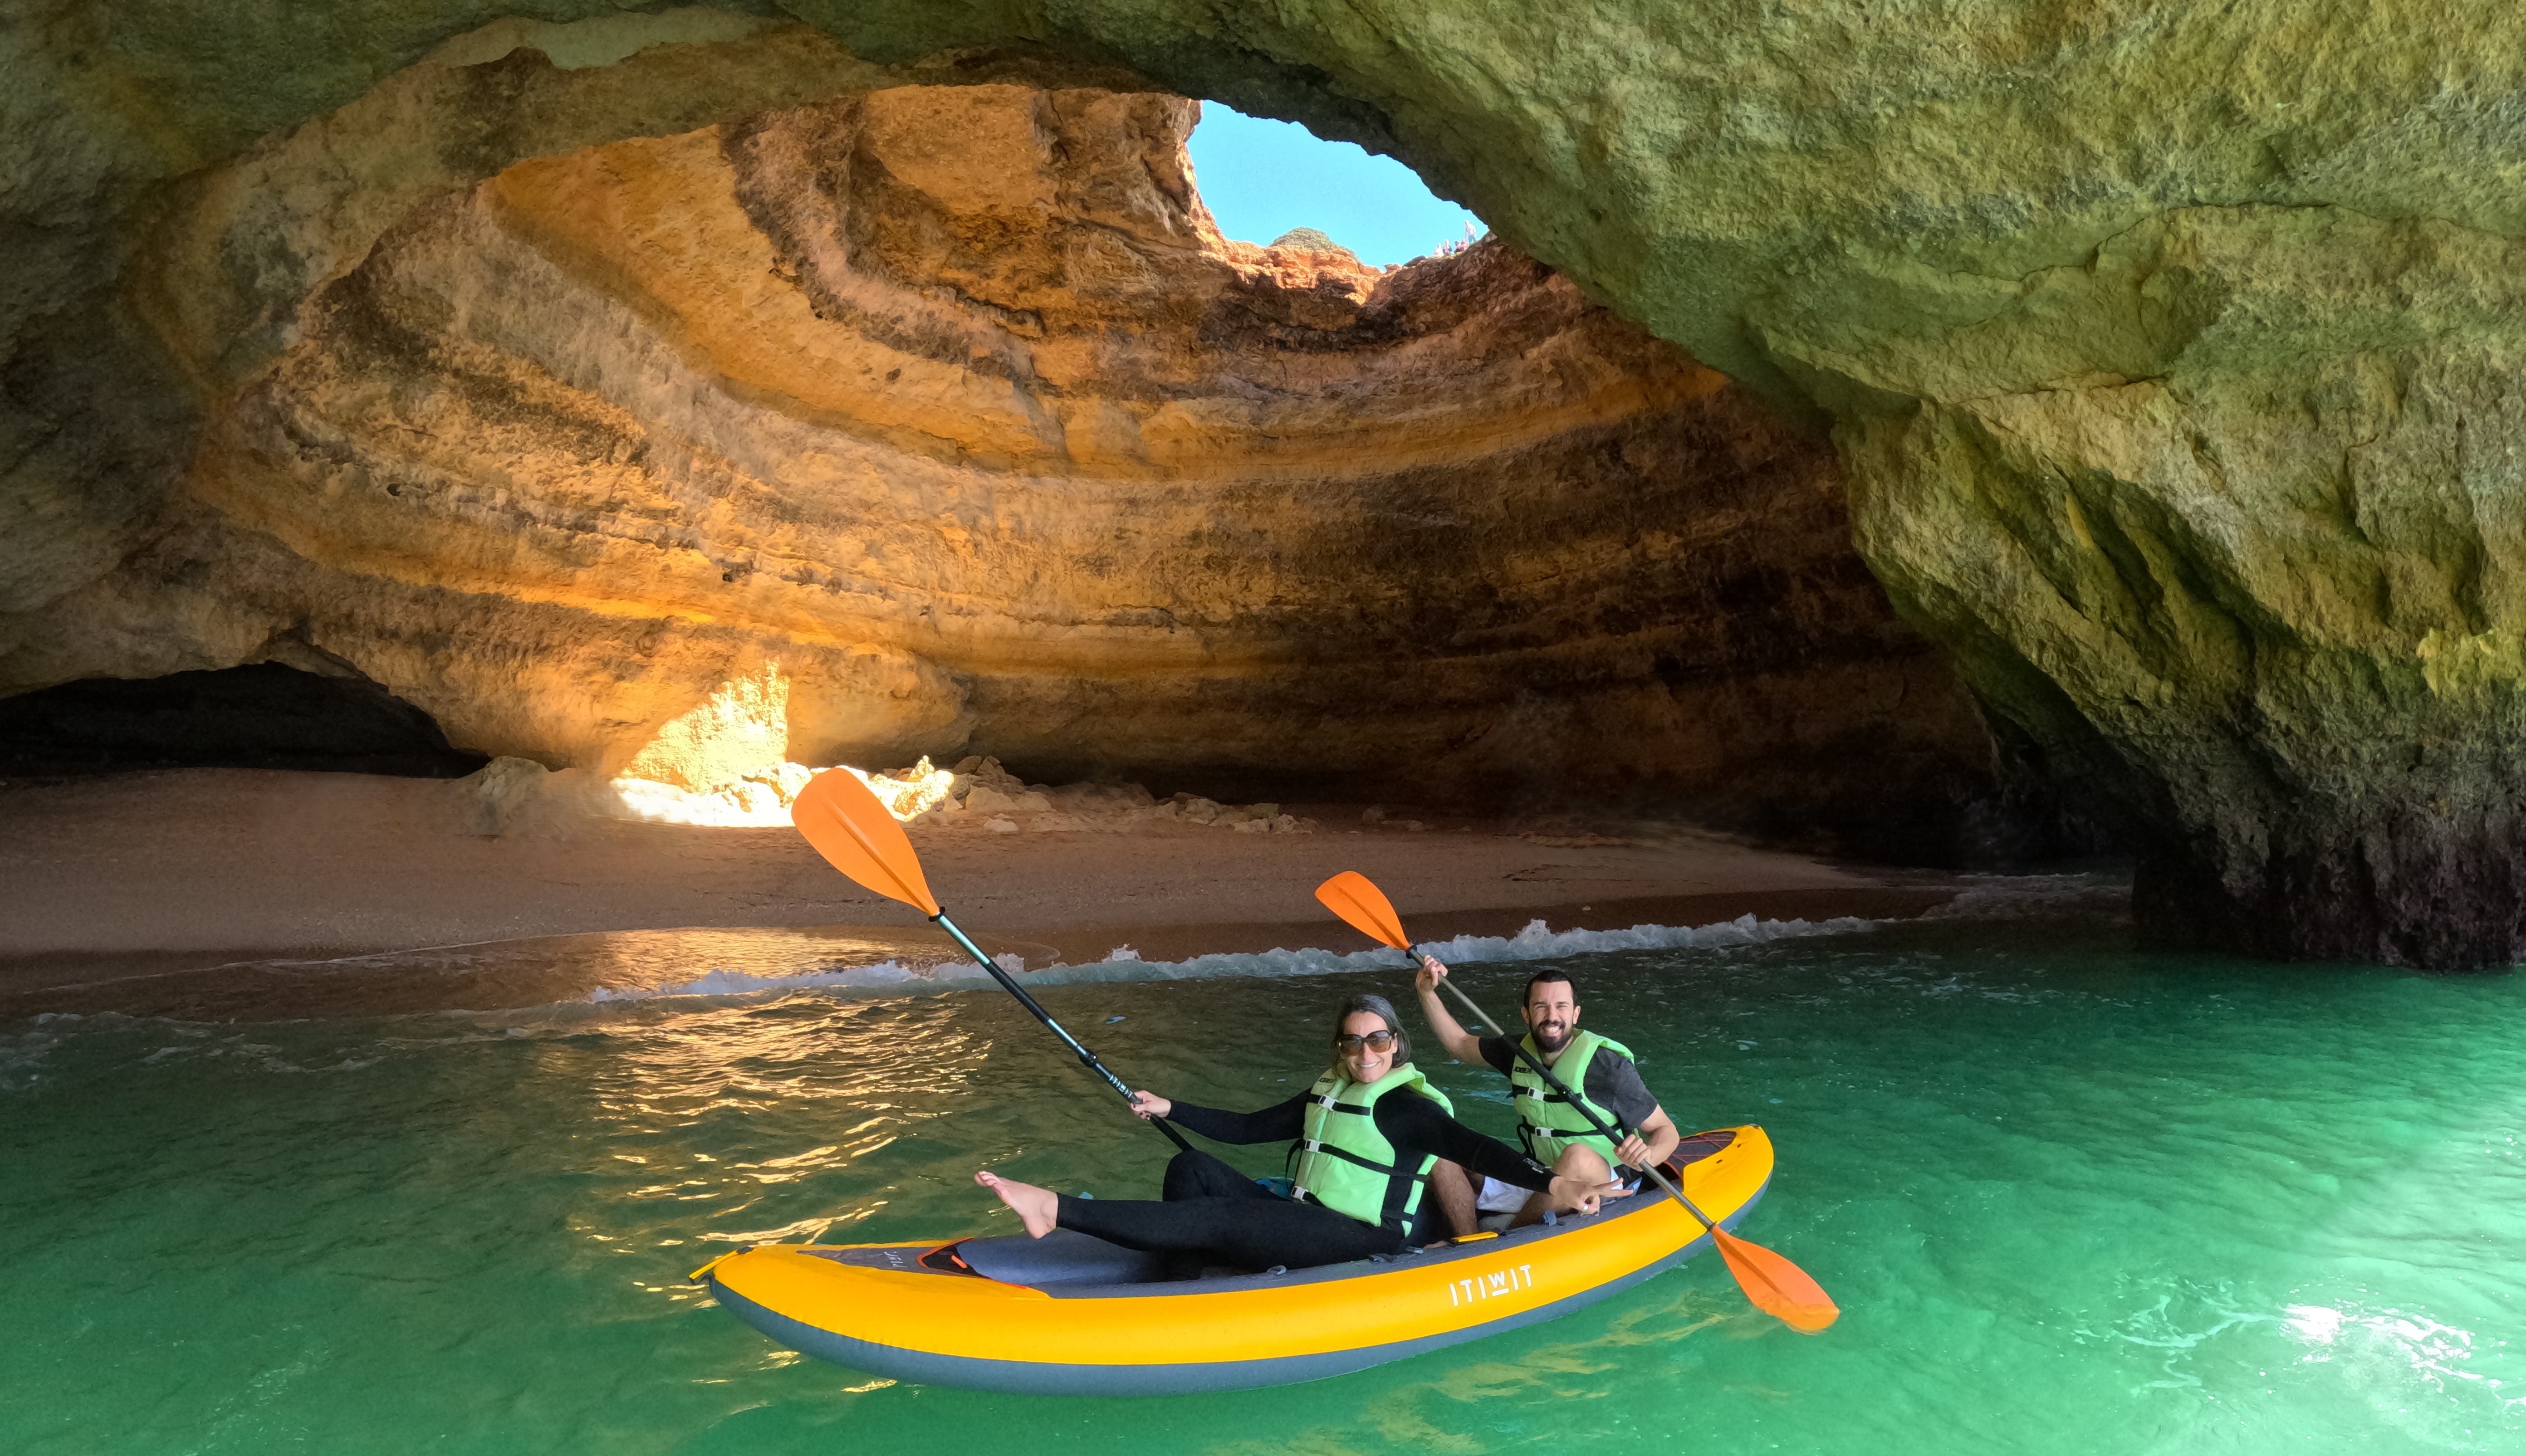 Sunrise Kayak Tour to Benagil Cave Free 4k Photos taken and given to you